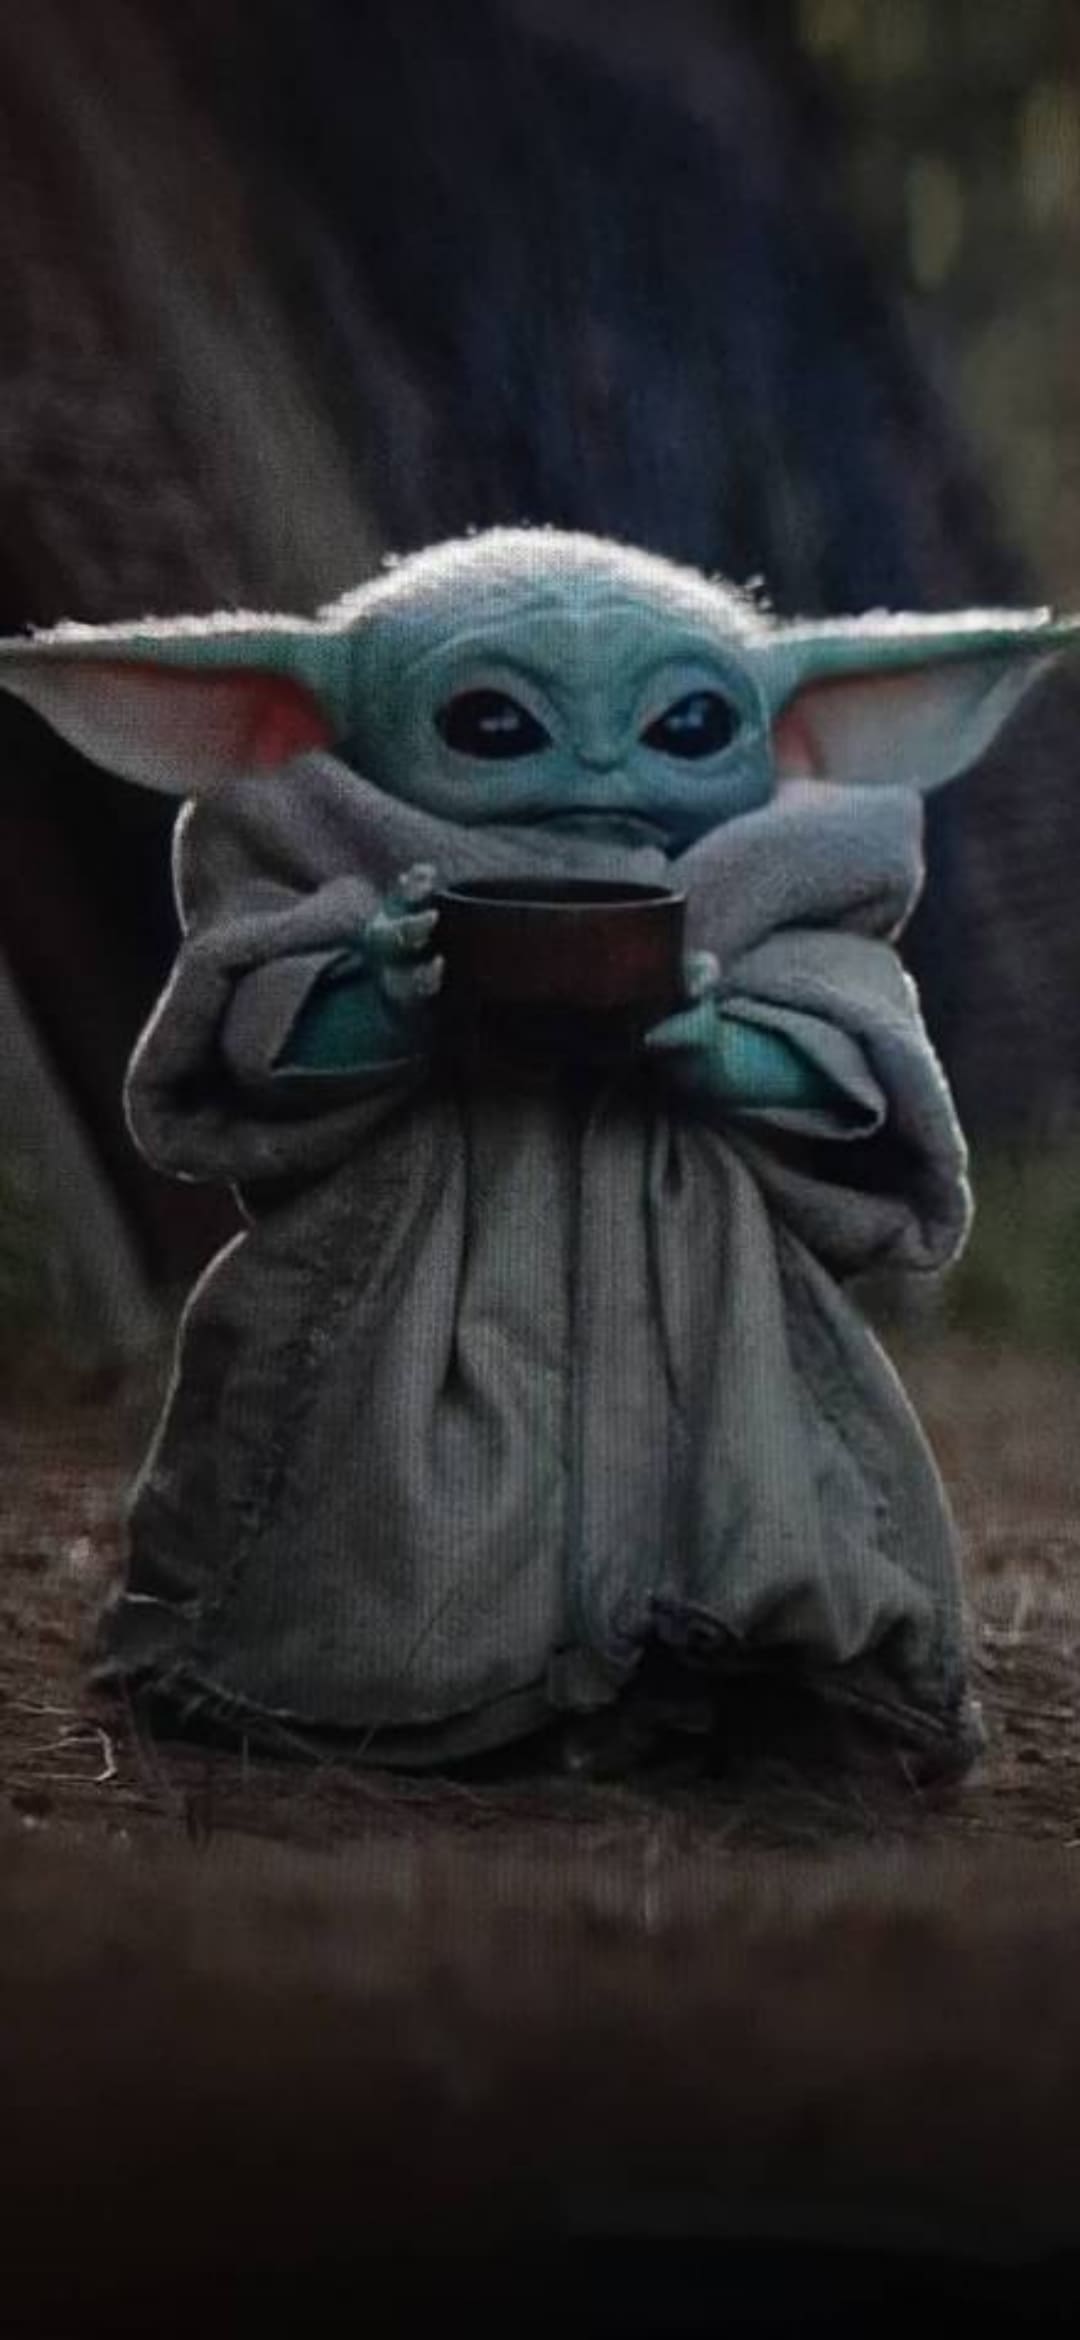  Baby Yoda iPhone Wallpapers Download Yoda iPhone